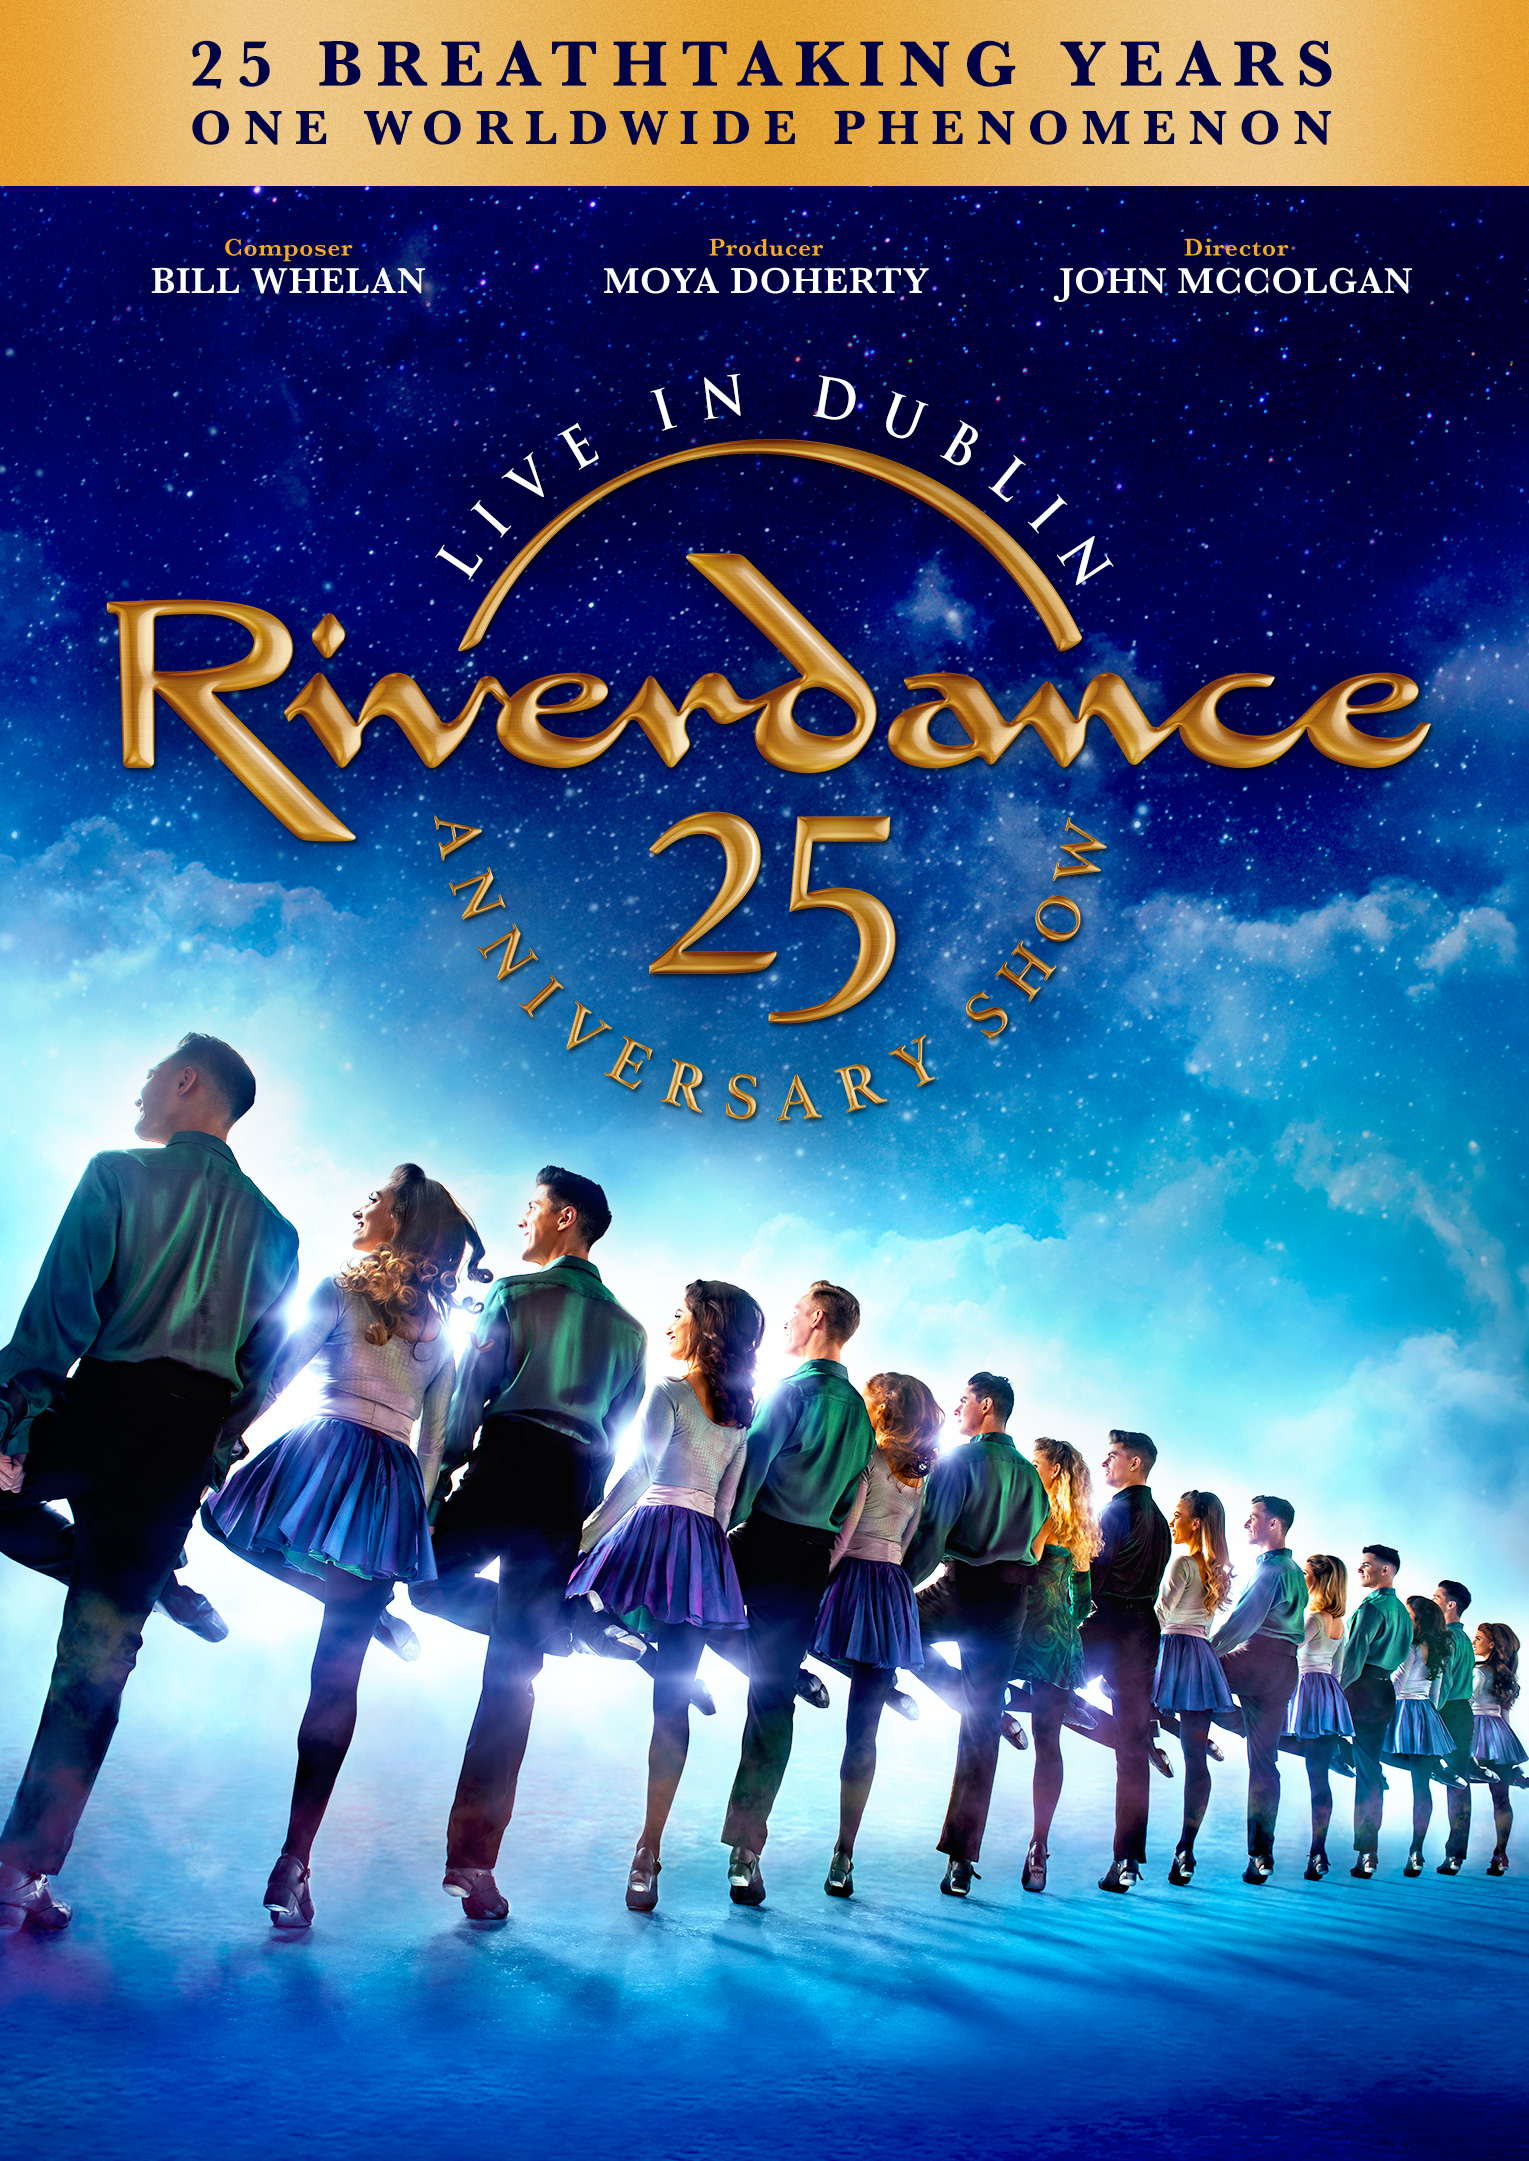 riverdance anniversary tour